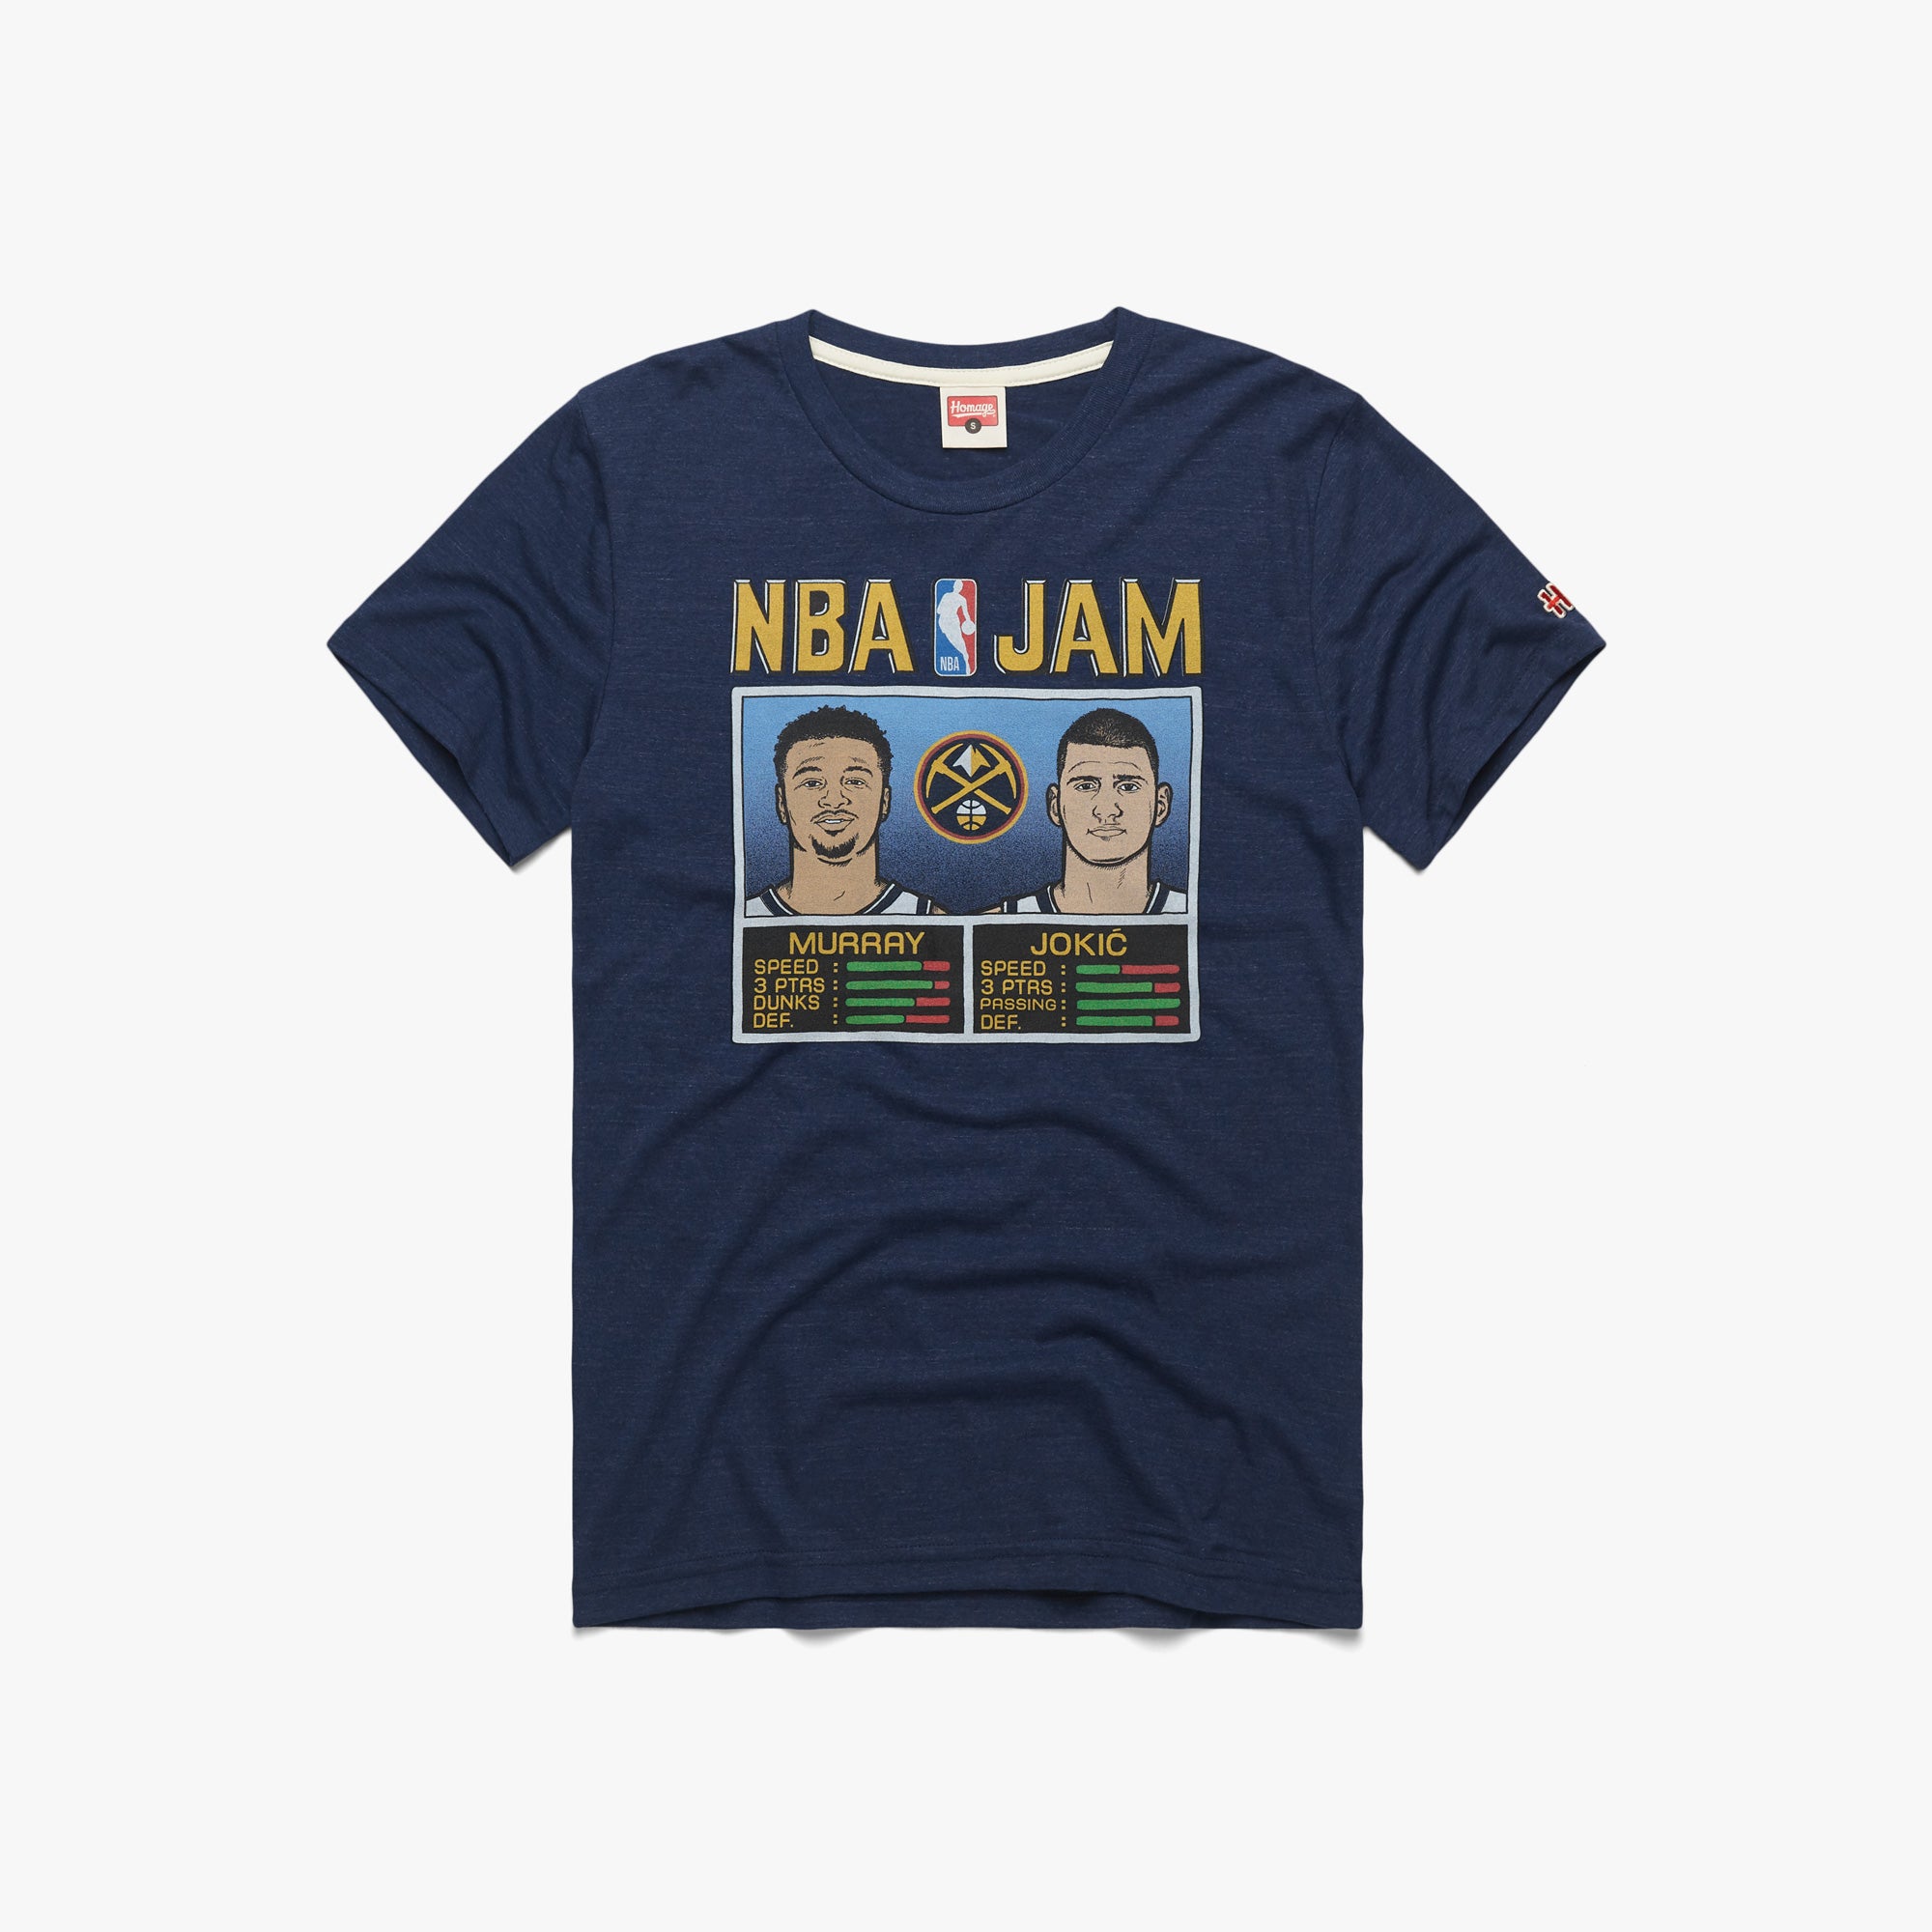 Jamal Murray And Nikola Jokic Shirt